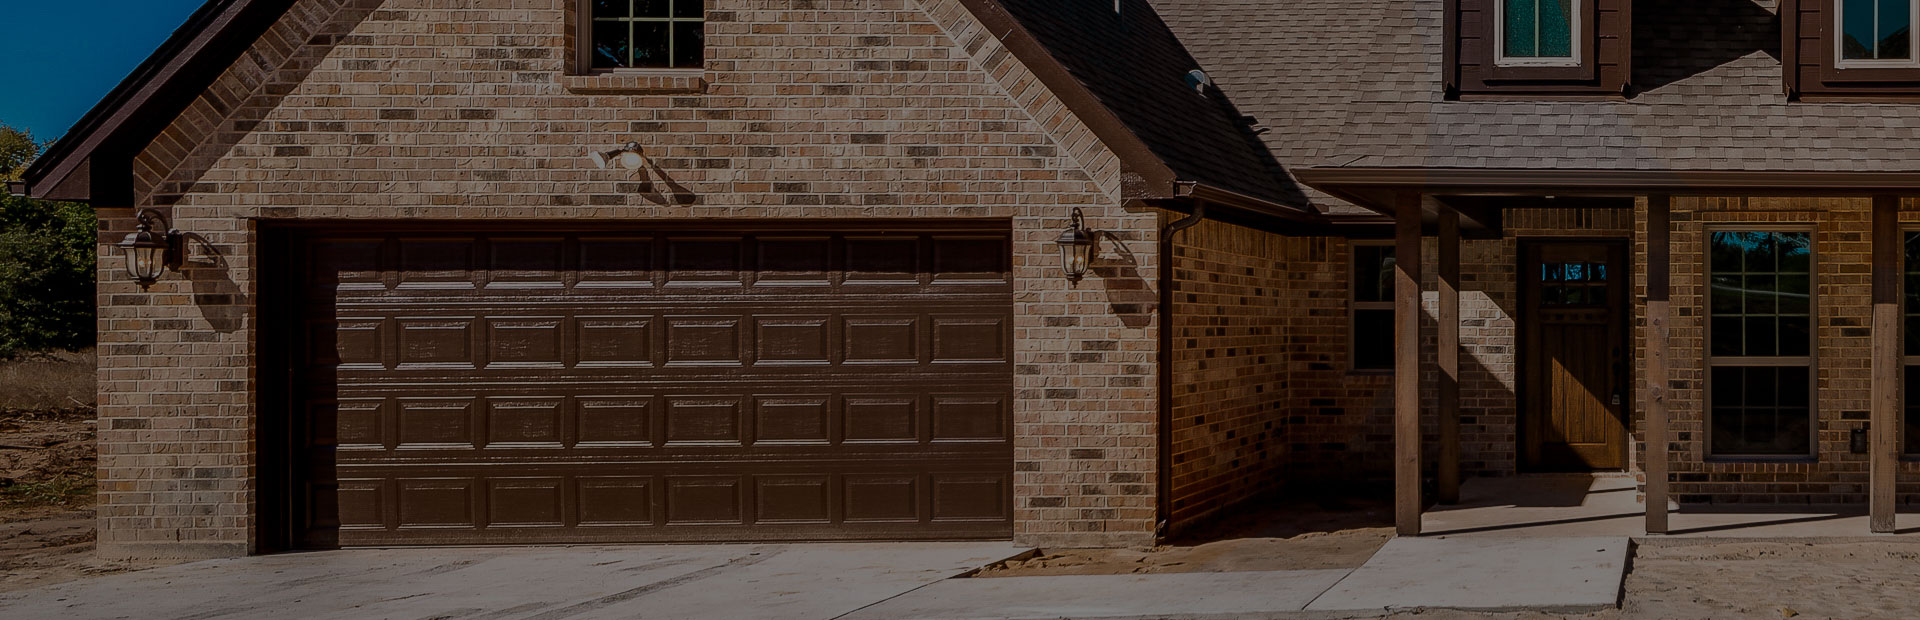 Automatic Garage Doors - Dallas Fort Worth